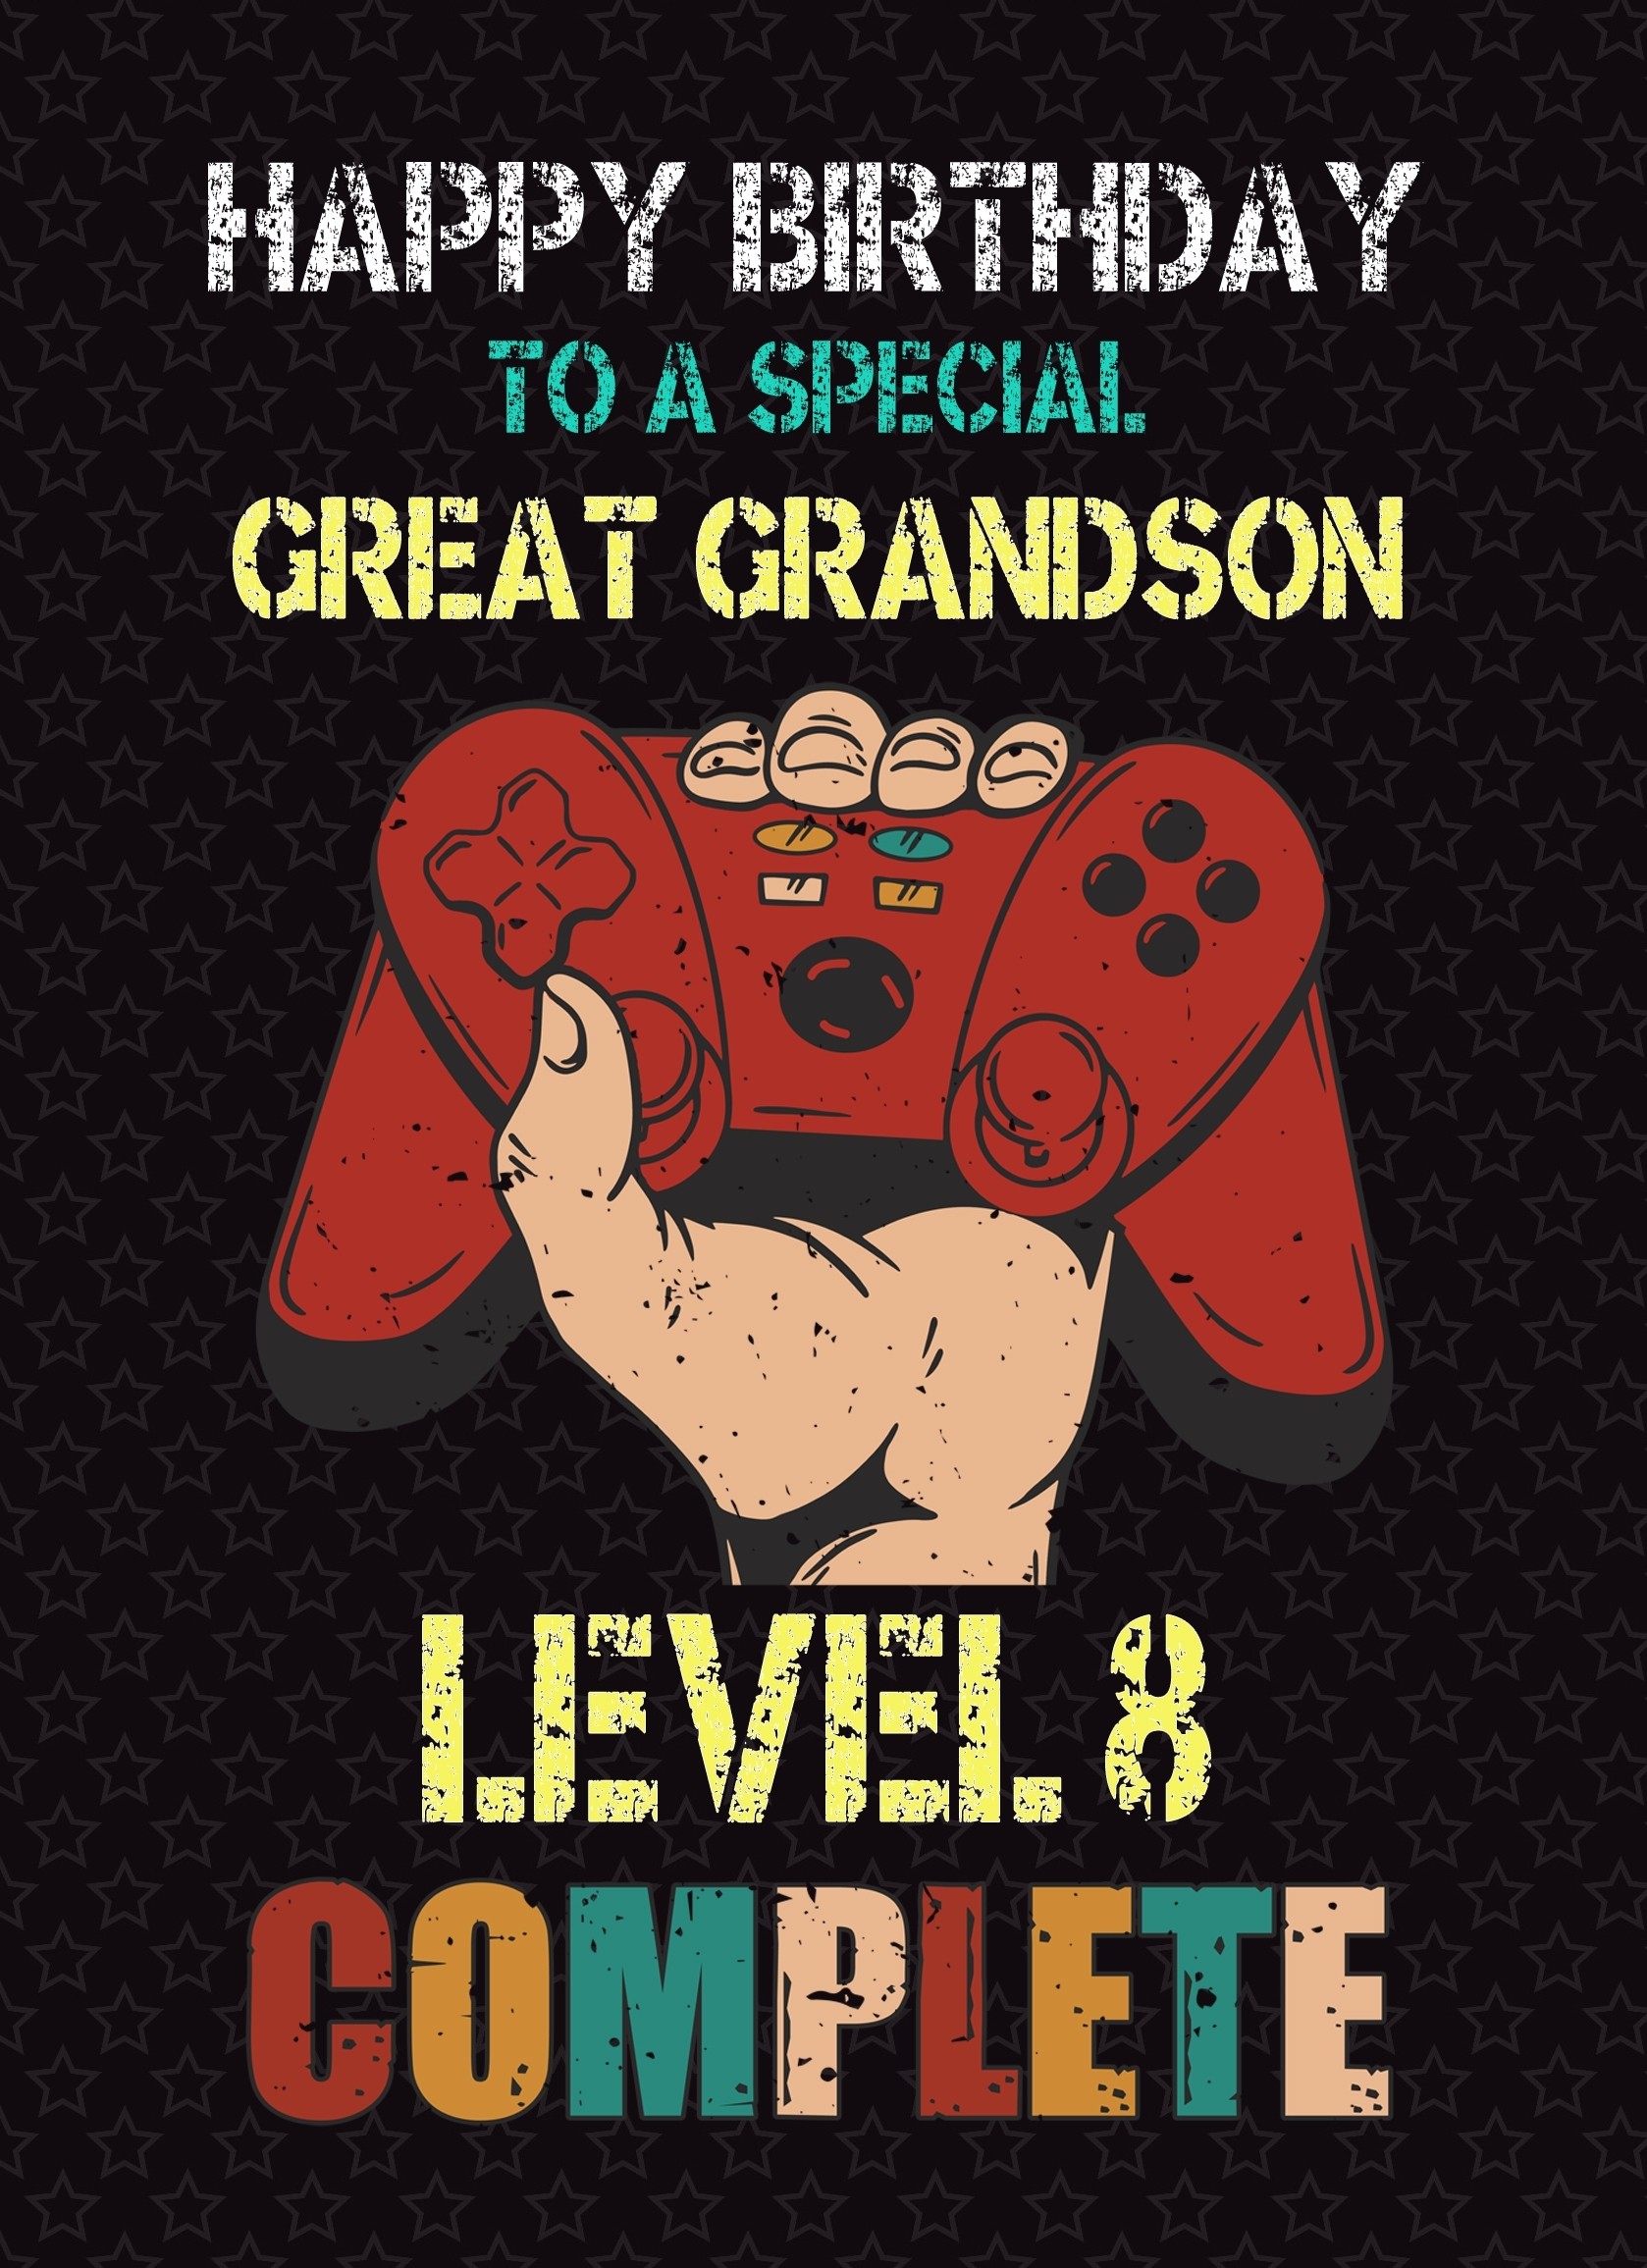 Great Grandson 9th Birthday Card (Gamer, Design 3)